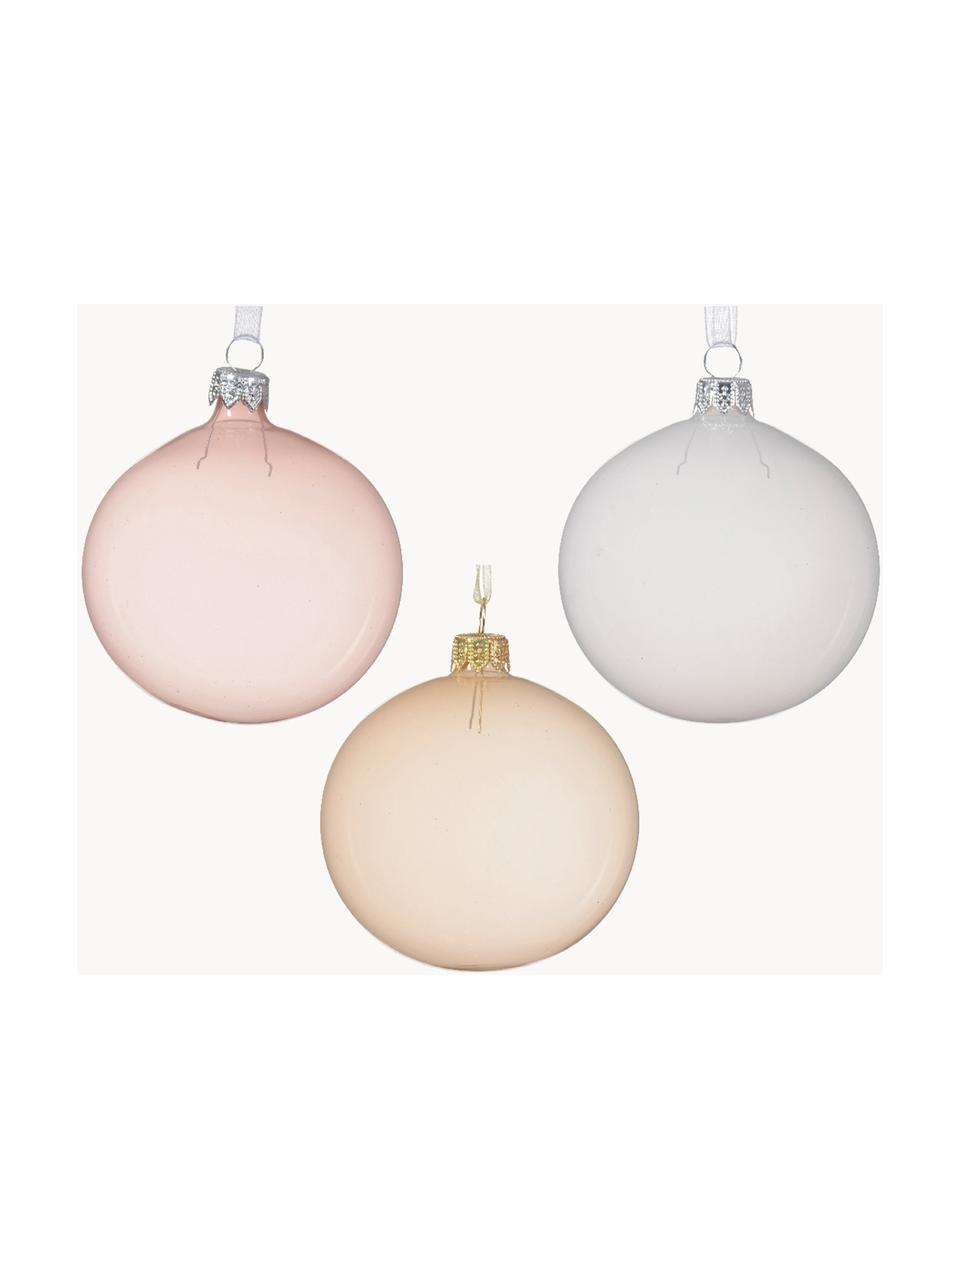 Set de bolas de Navidad Shades, 6 uds., Vidrio, Rosa, blanco, beige, transparente, Ø 8 cm